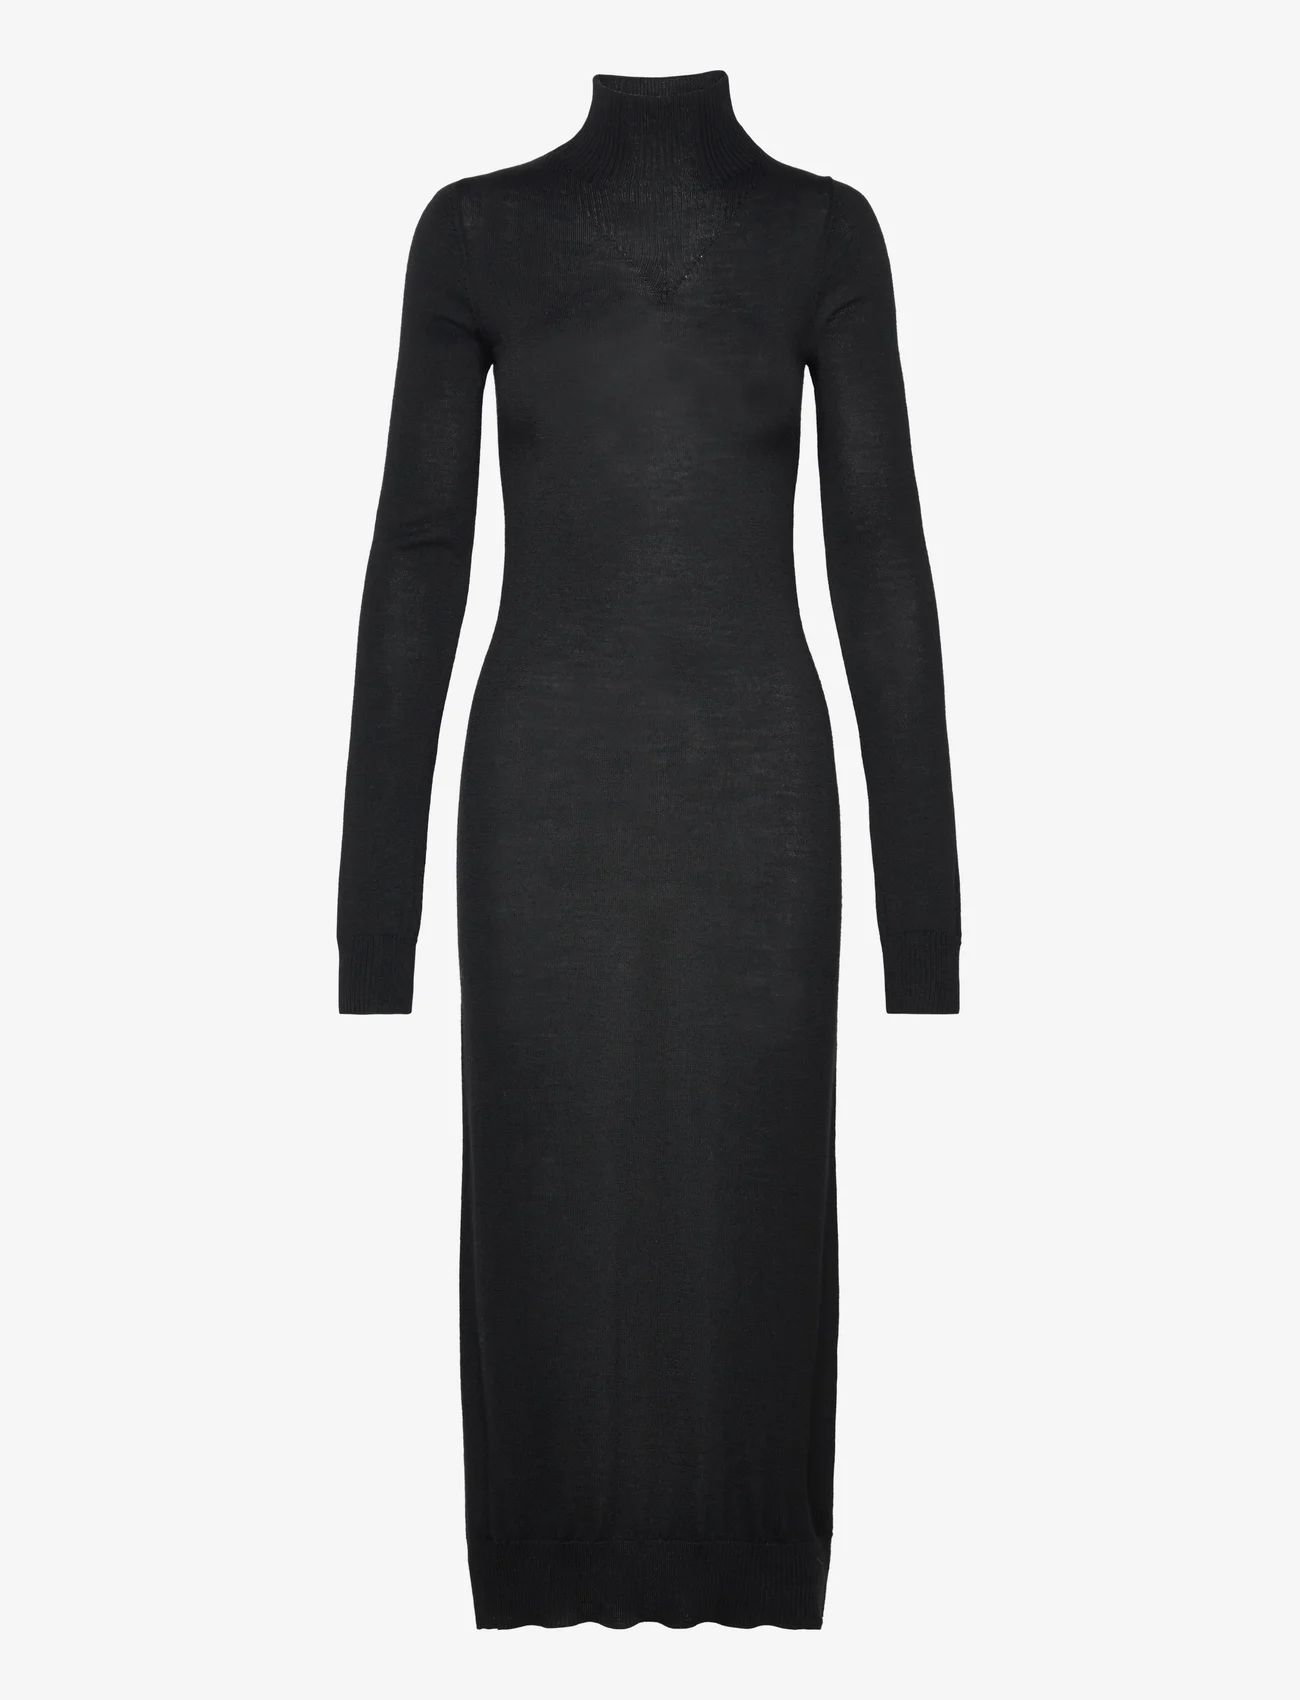 Filippa K - Knit Turtleneck Dress - sukienki dopasowane - black - 0